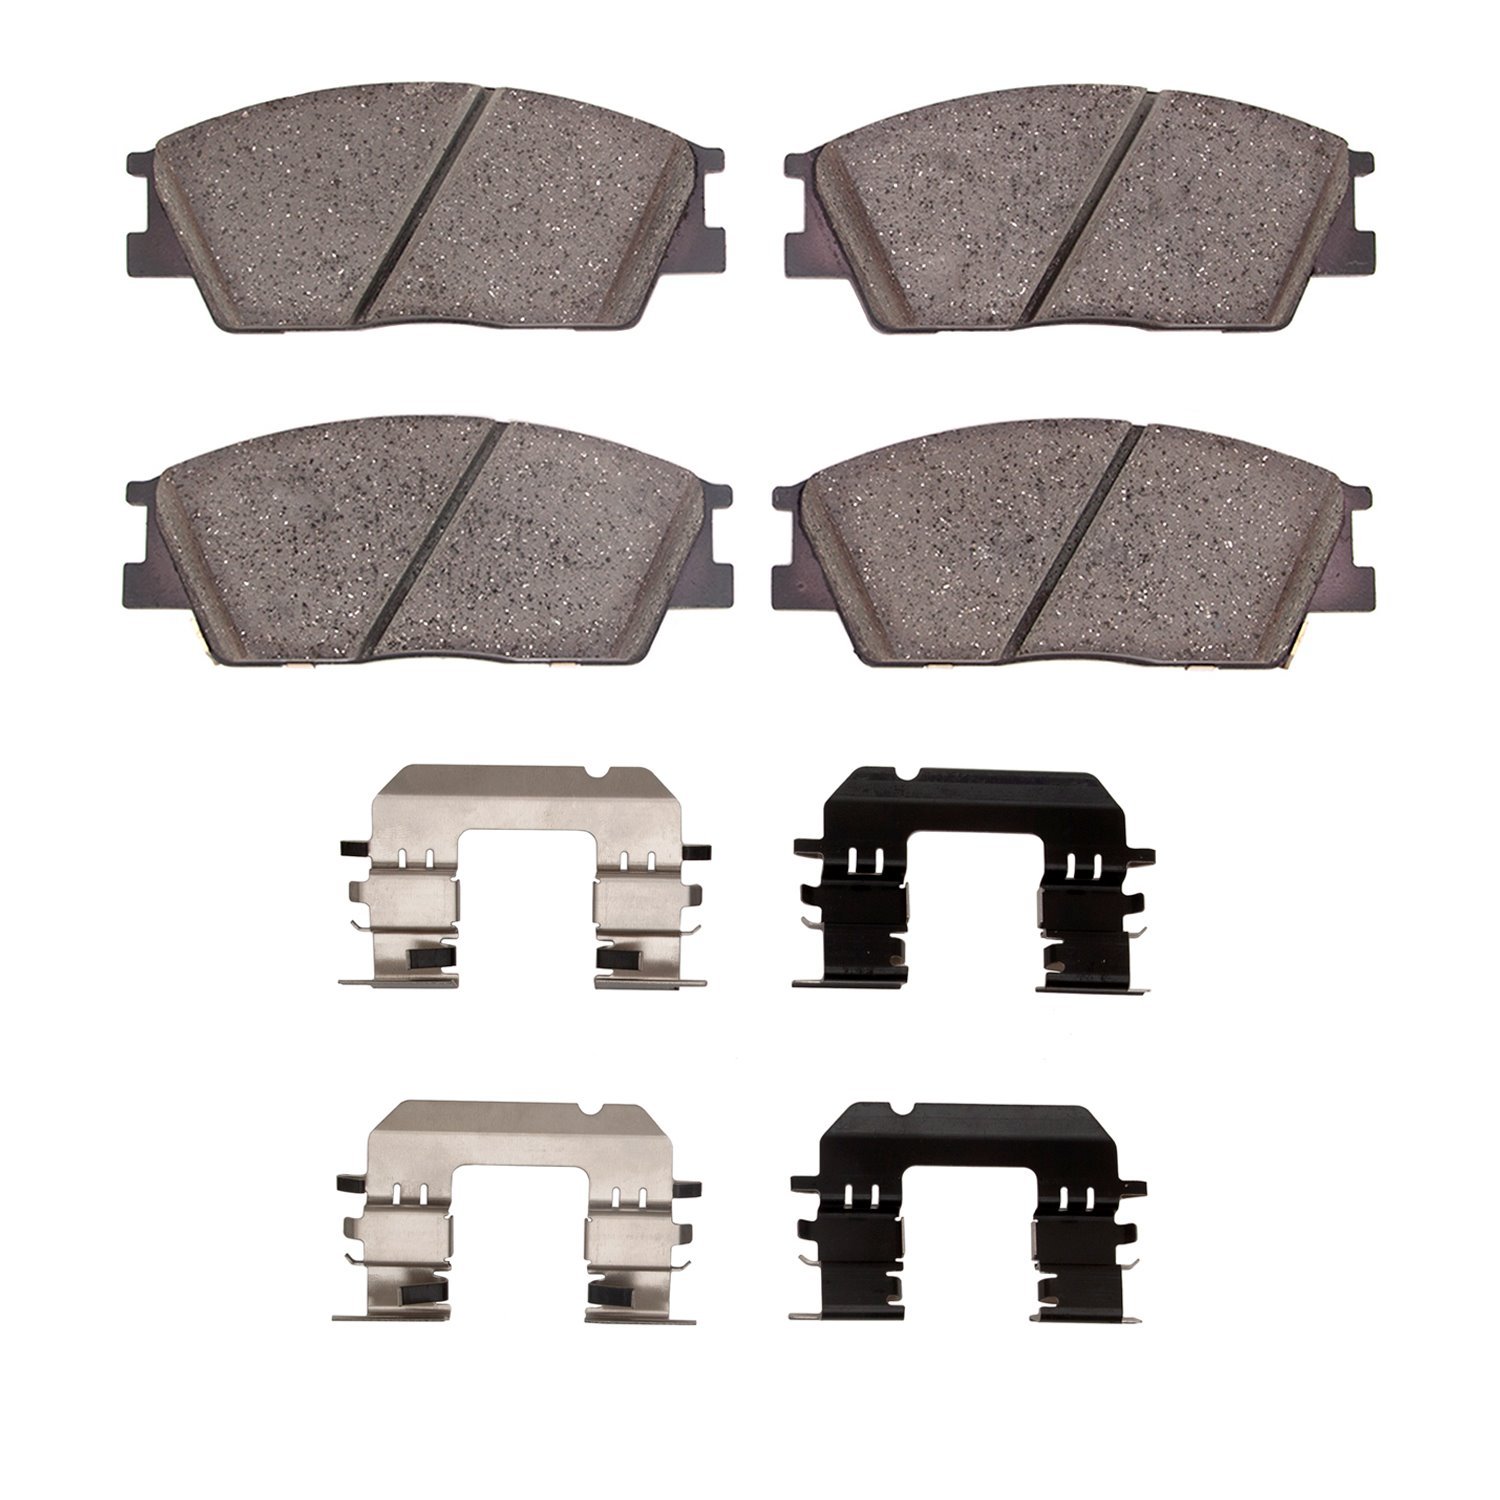 1310-2285-01 3000-Series Ceramic Brake Pads & Hardware Kit, Fits Select Kia/Hyundai/Genesis, Position: Front